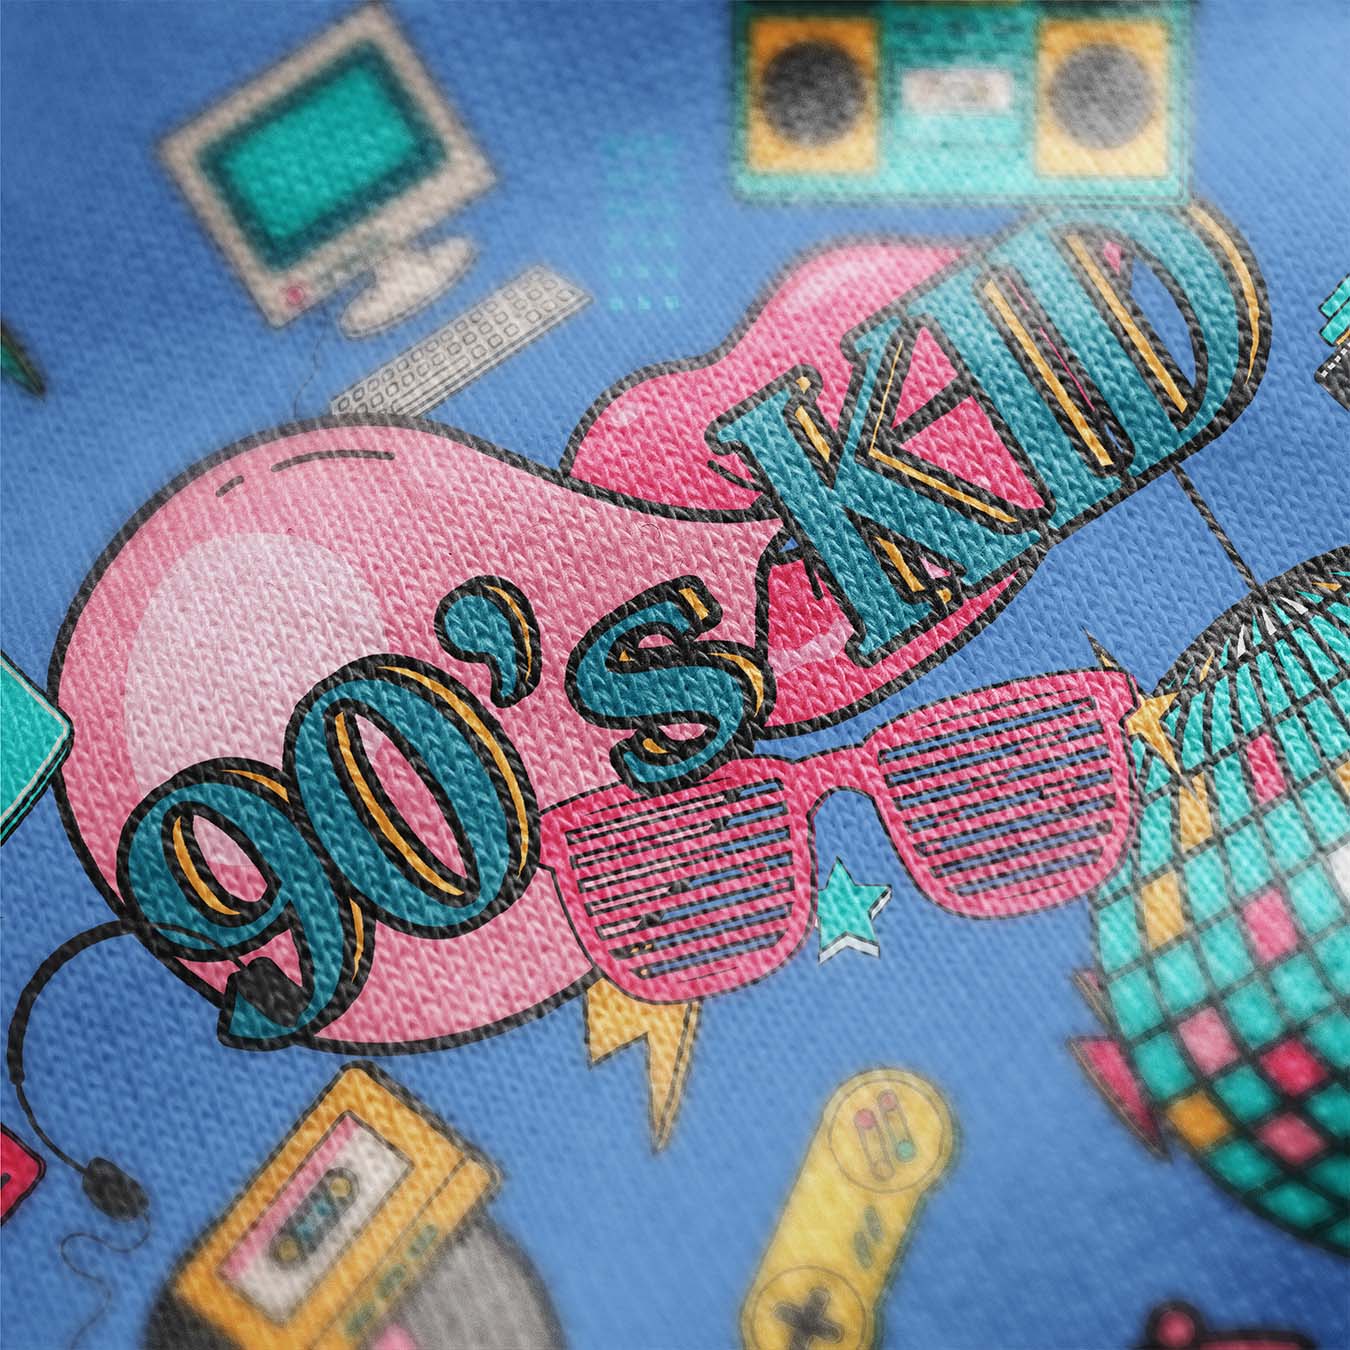 90's Kid Printed Sweatshirt - keos.life